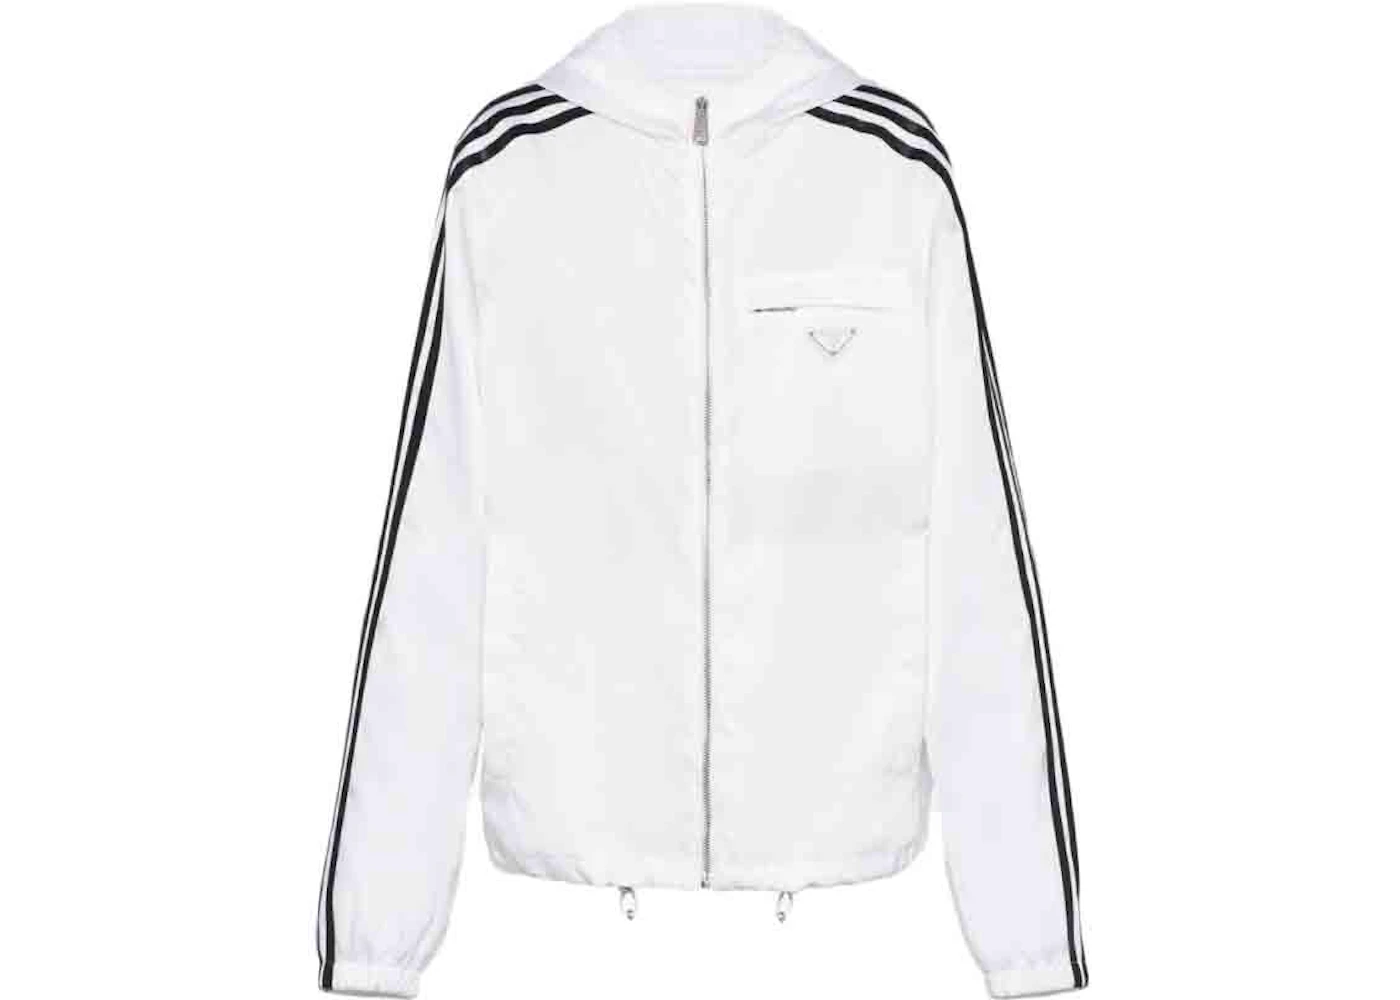 adidas for Prada Re-Nylon Hooded Track Jacket White - FW21 - US